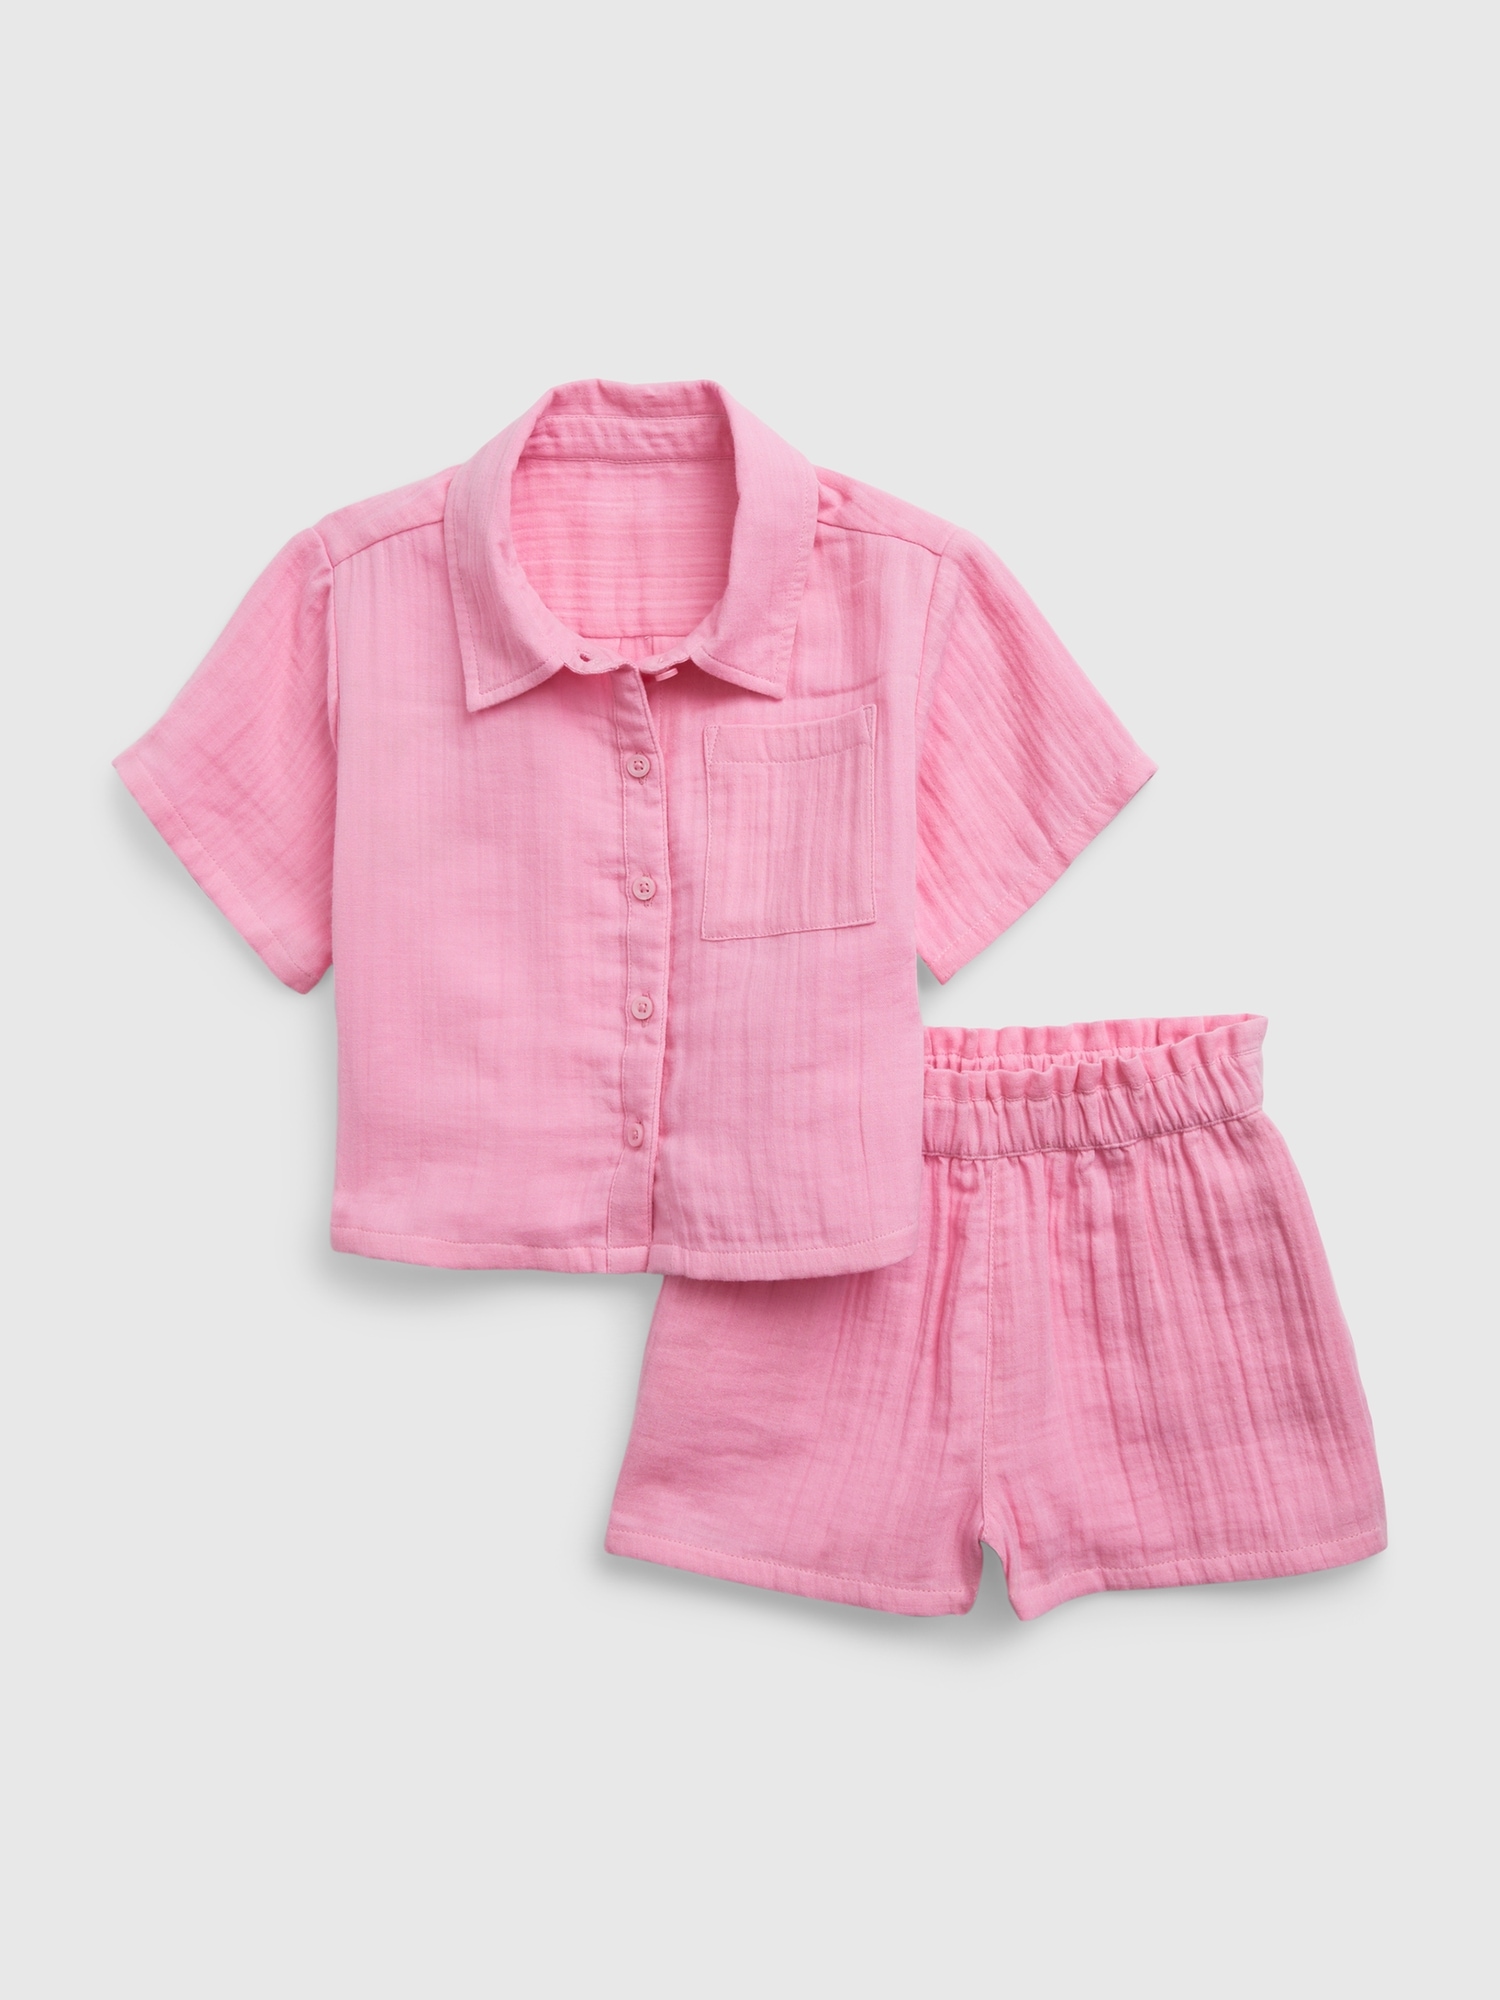 Gap Toddler Crinkle Gauze Outfit Set pink. 1